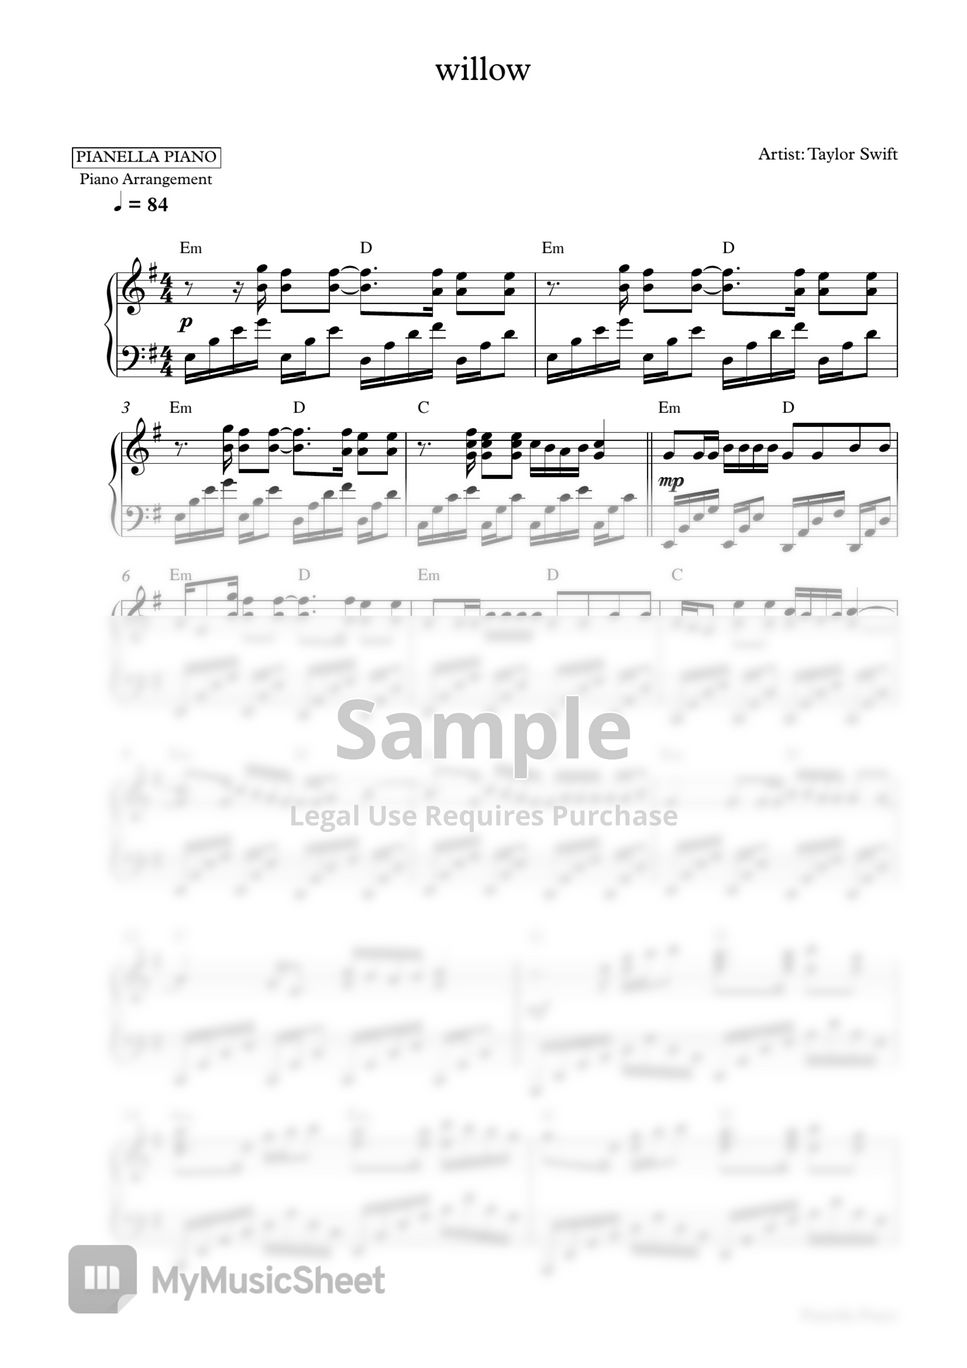 Taylor Swift - willow (Piano Sheet) by Pianella Piano